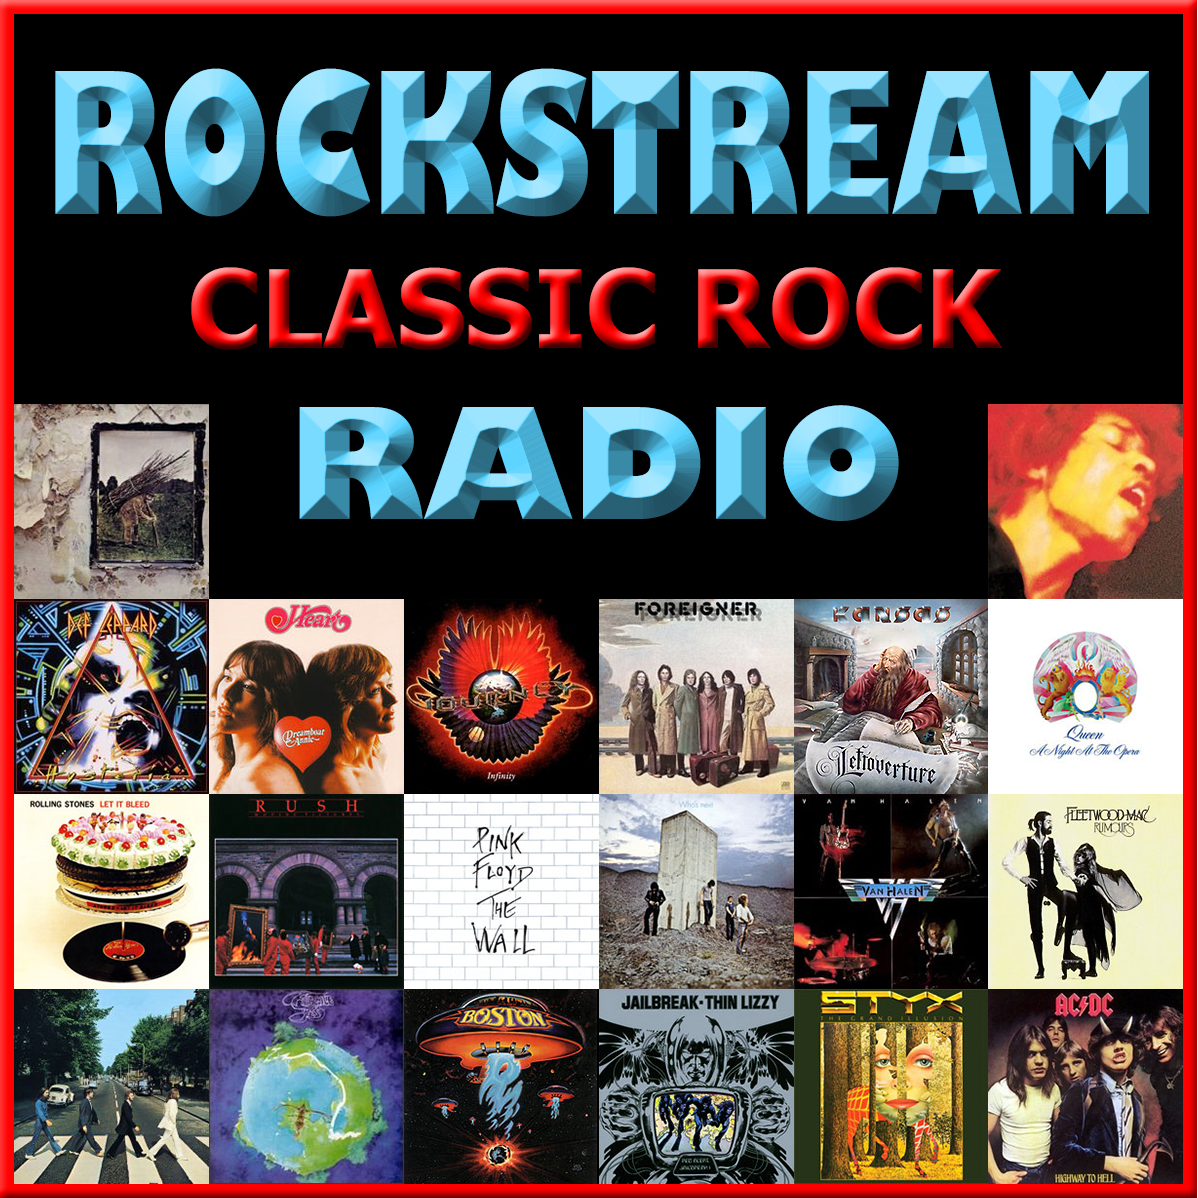 Radionomy – Rockstream Radio Classic Rock | free online radio station